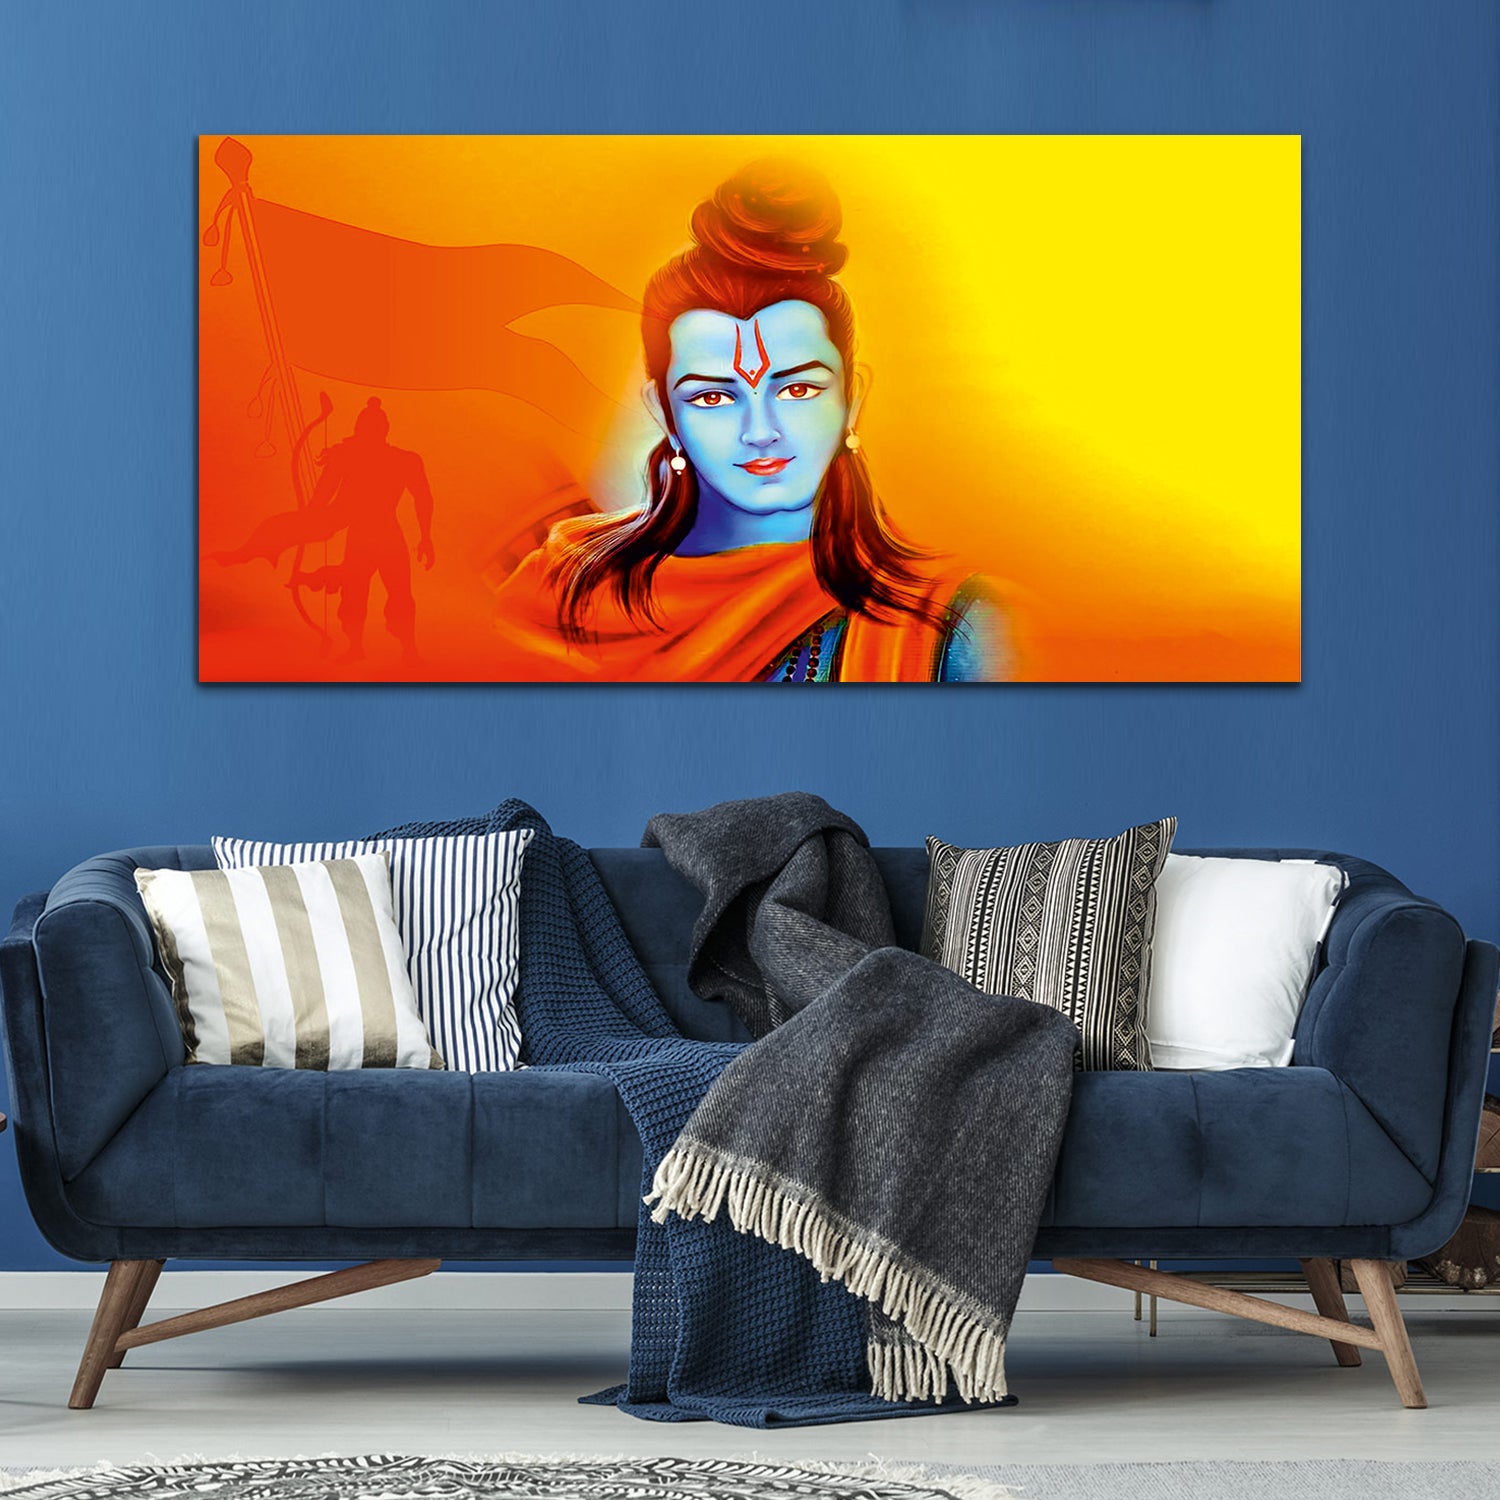 Shree Ram Orange & Yellow Canvas Wall Art Painting